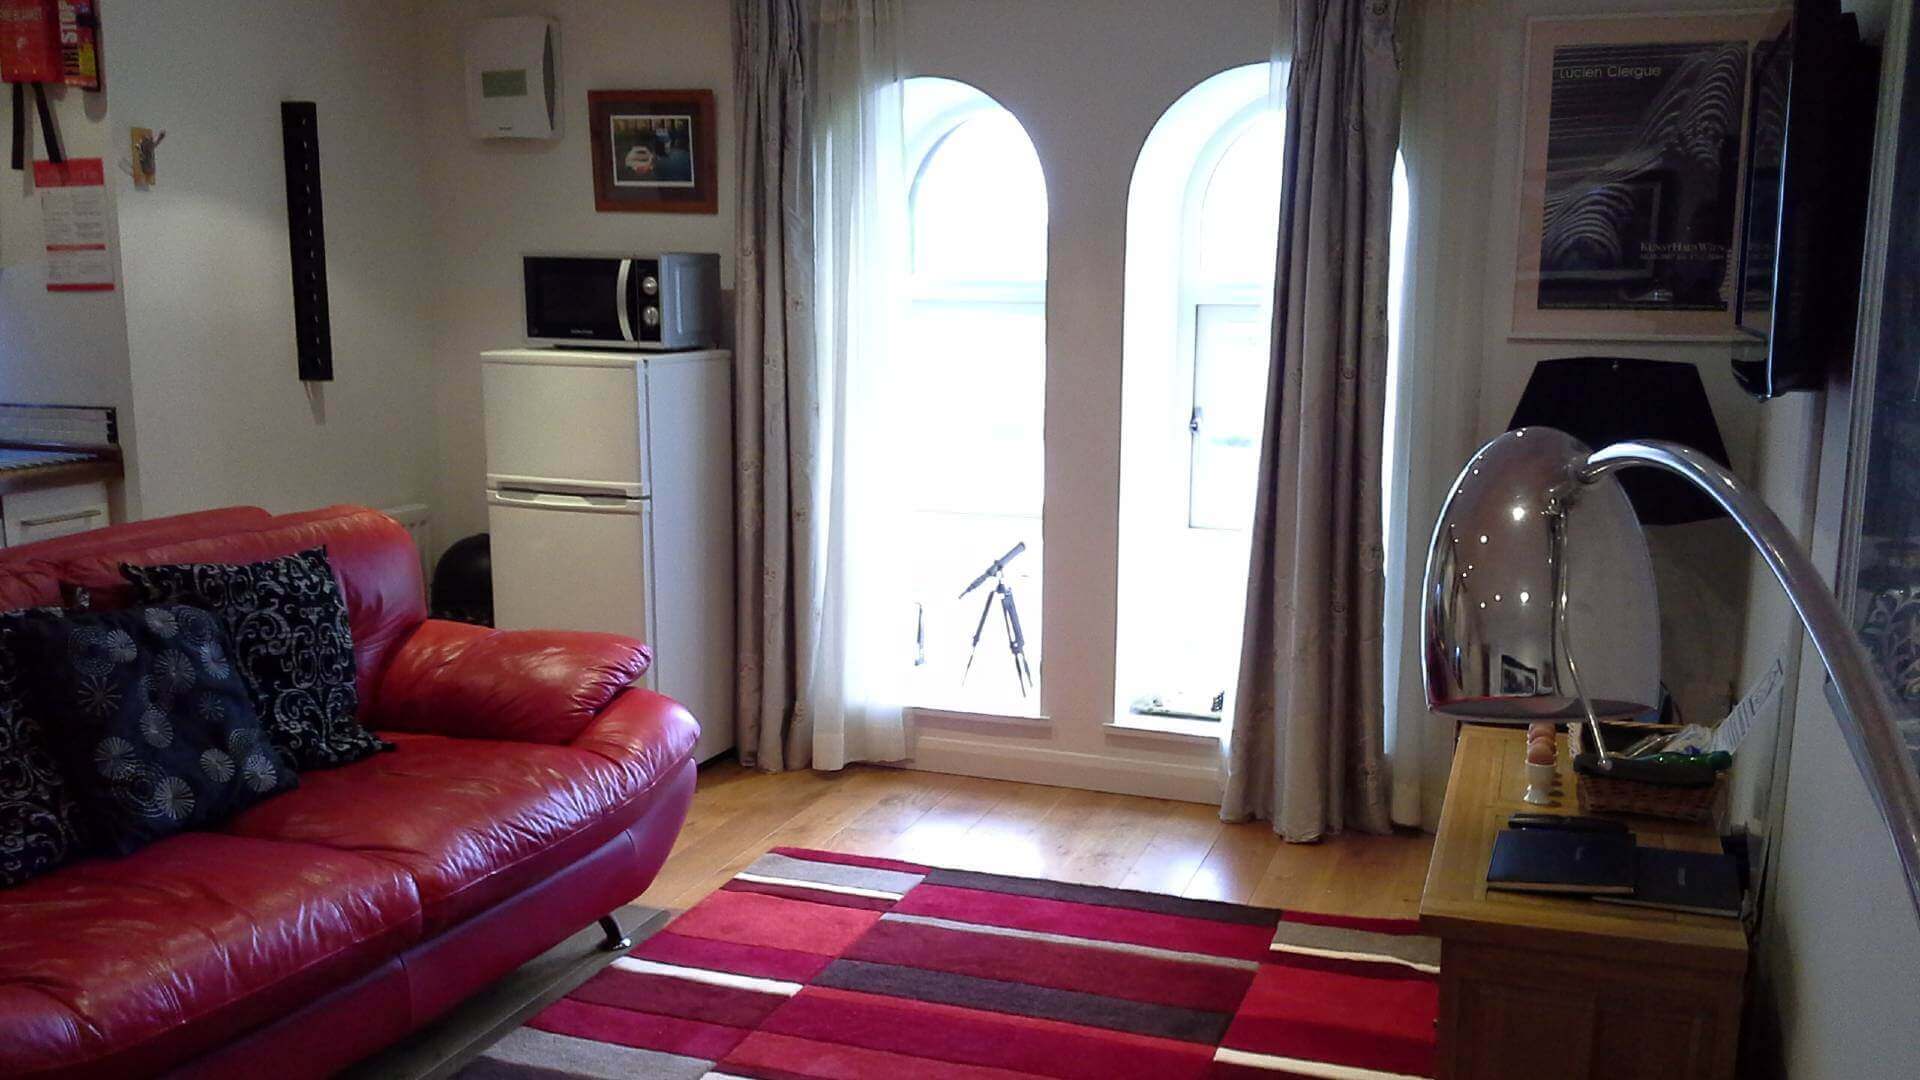 Interior living space